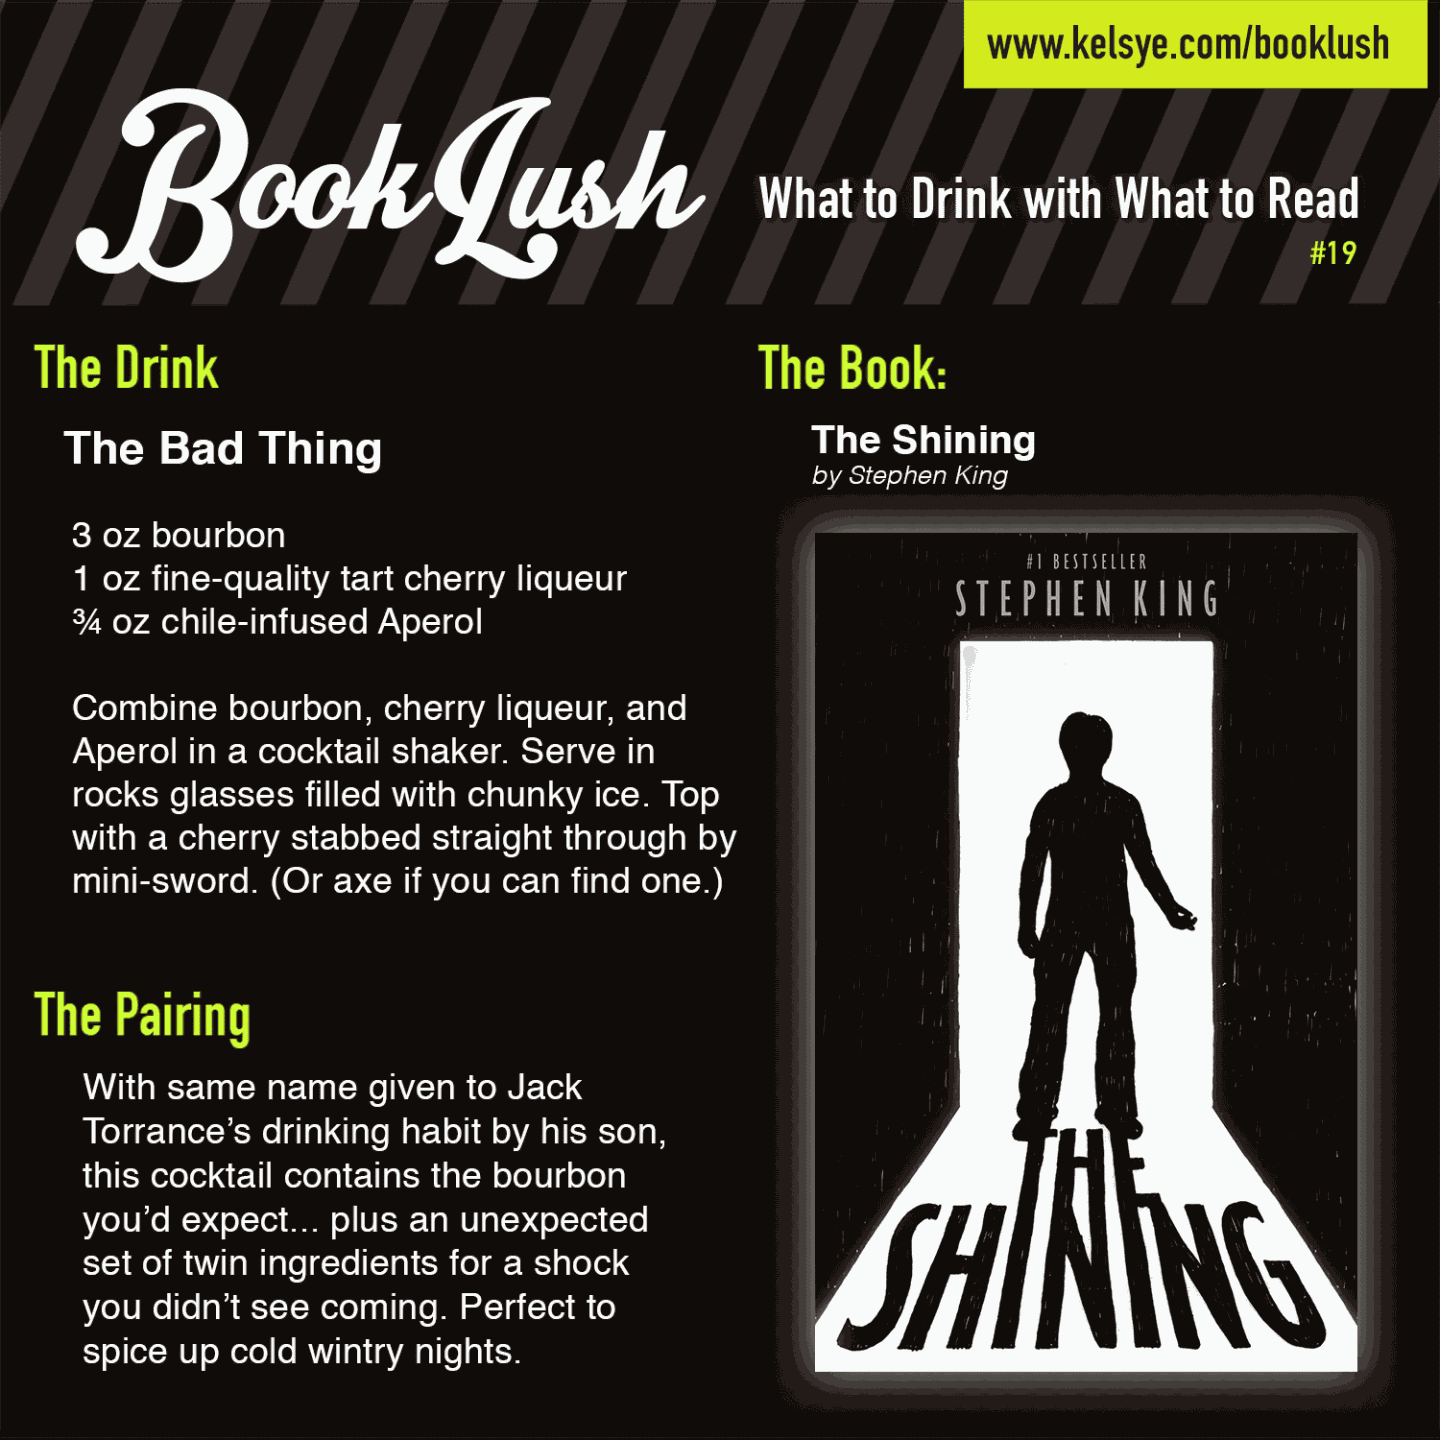 Book Lush 19 - Stephen King The Shining